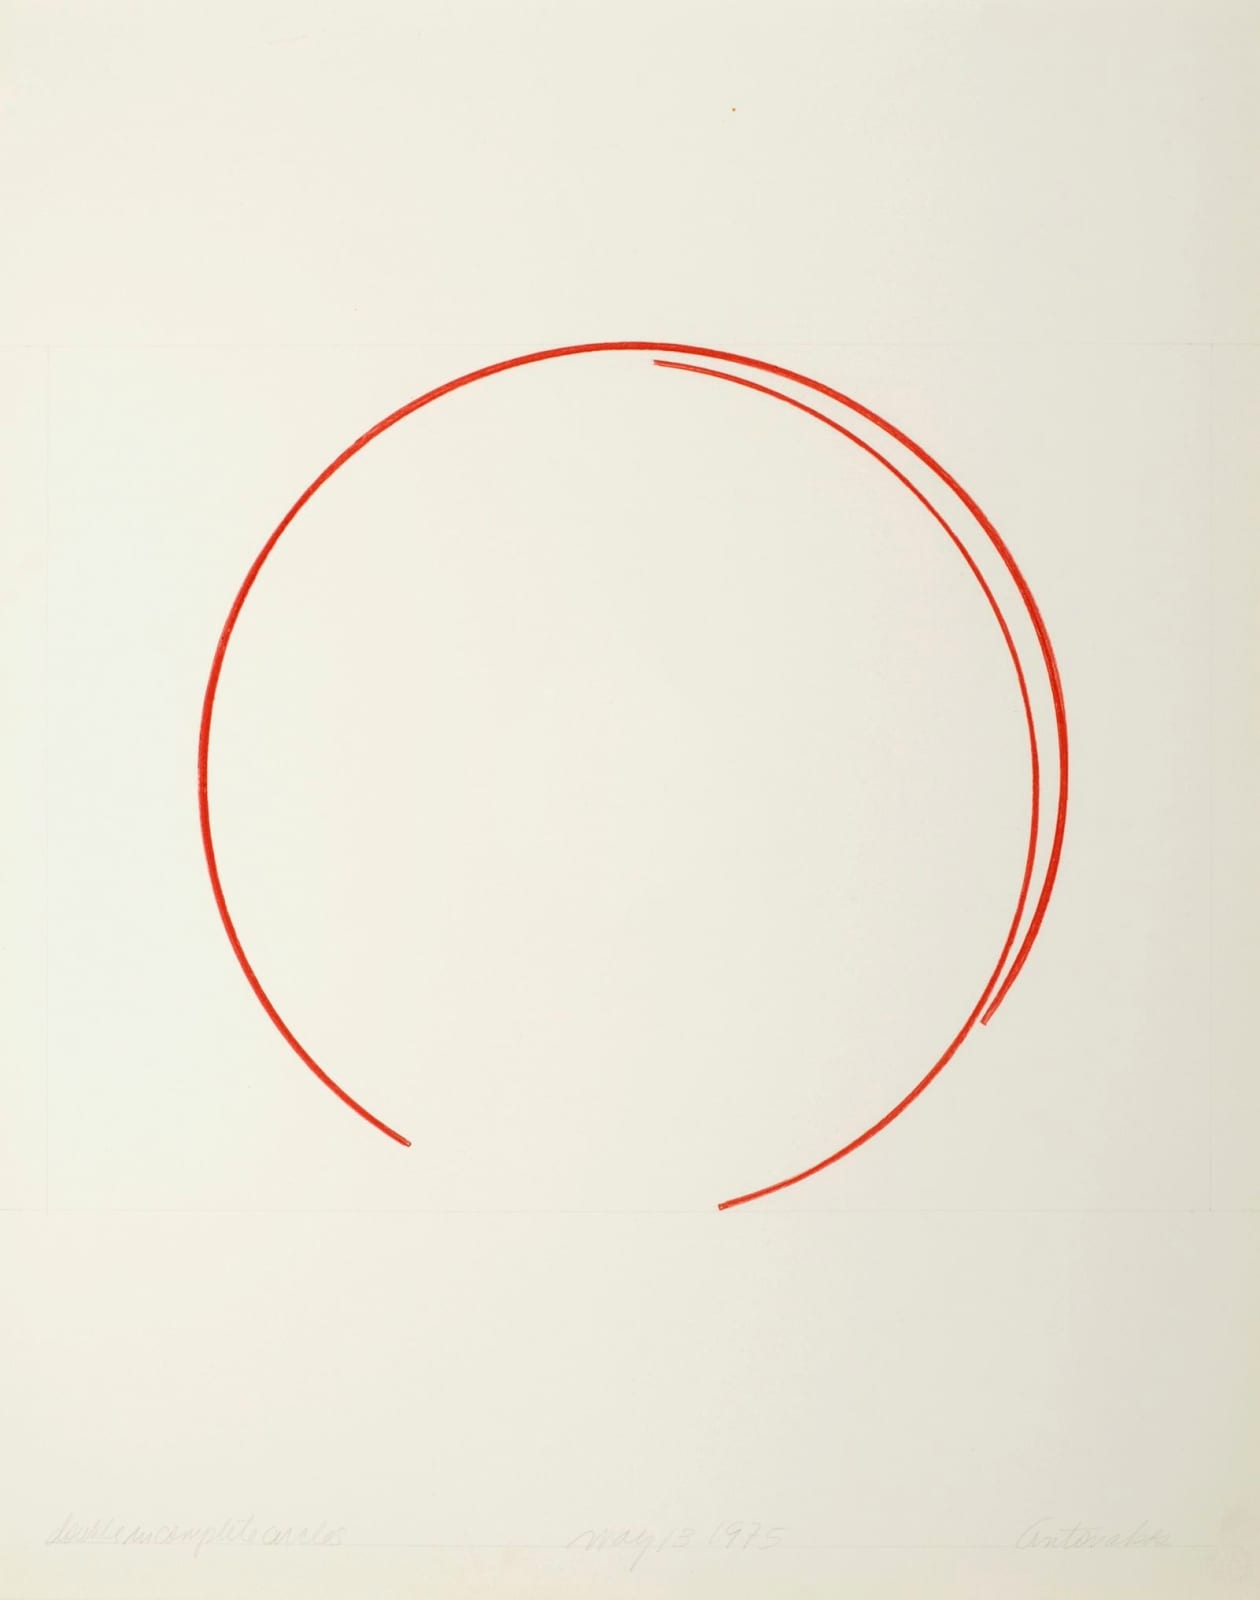 Stephen Antonakos, Double Incomplete Circles, May 13, 1975